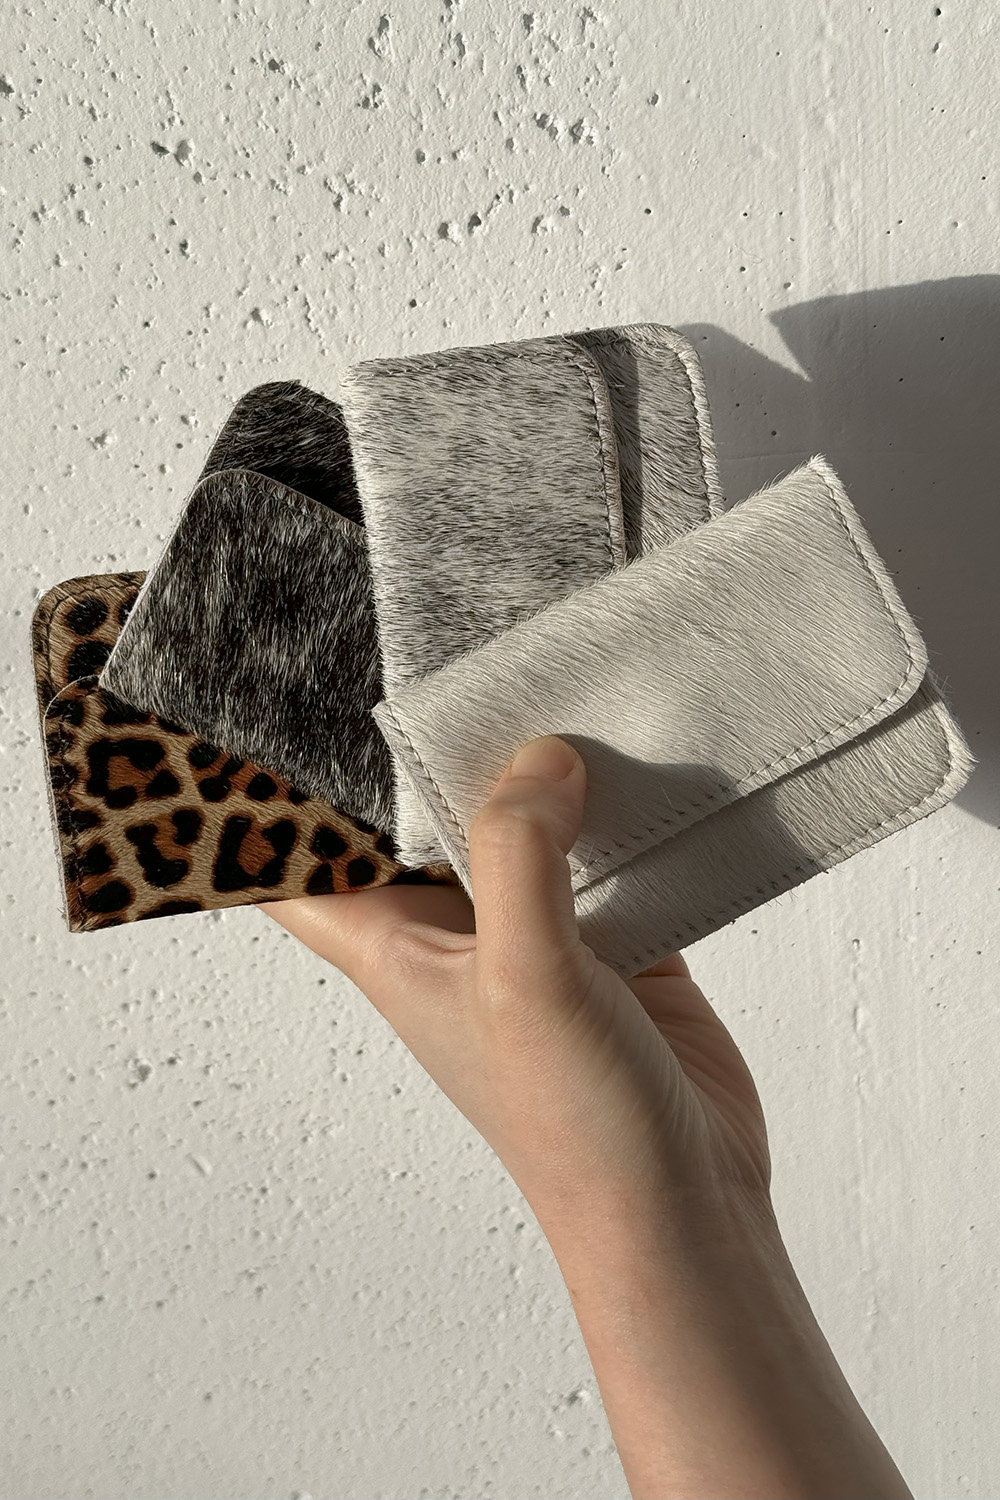 fur card wallet - white